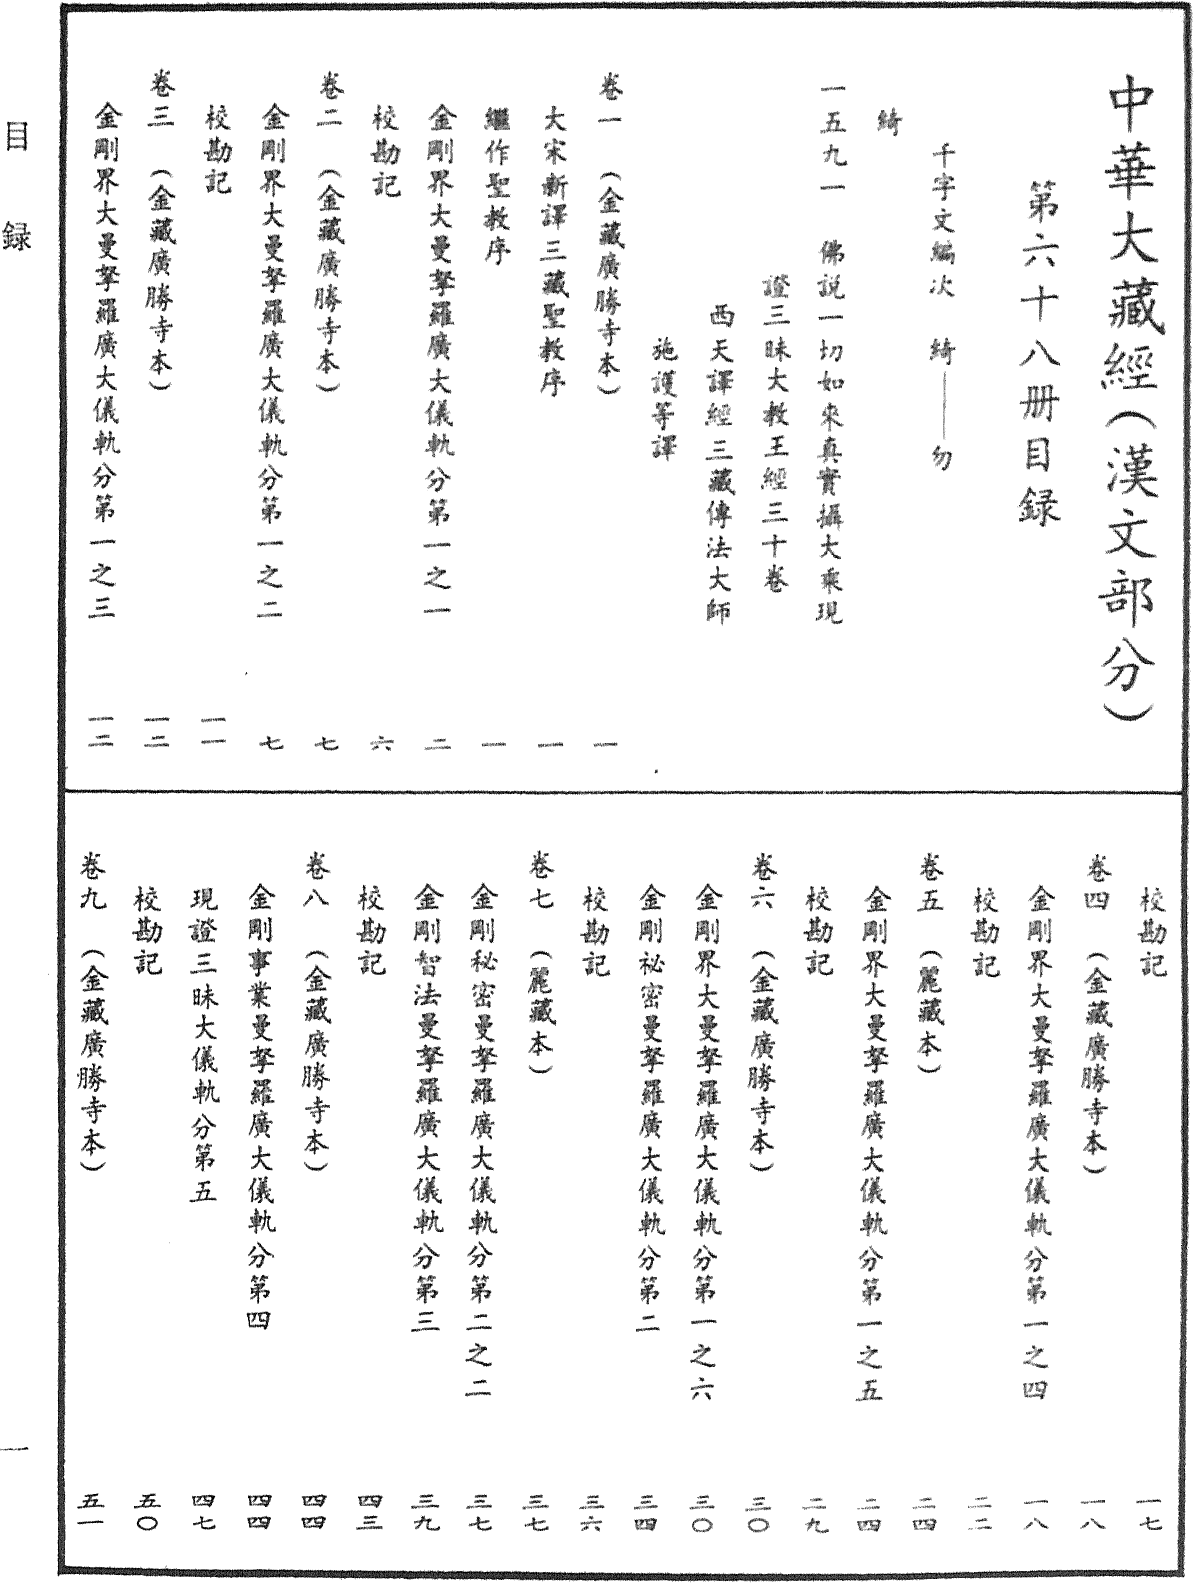 File:《中華大藏經》 第68冊 目録 (1).png